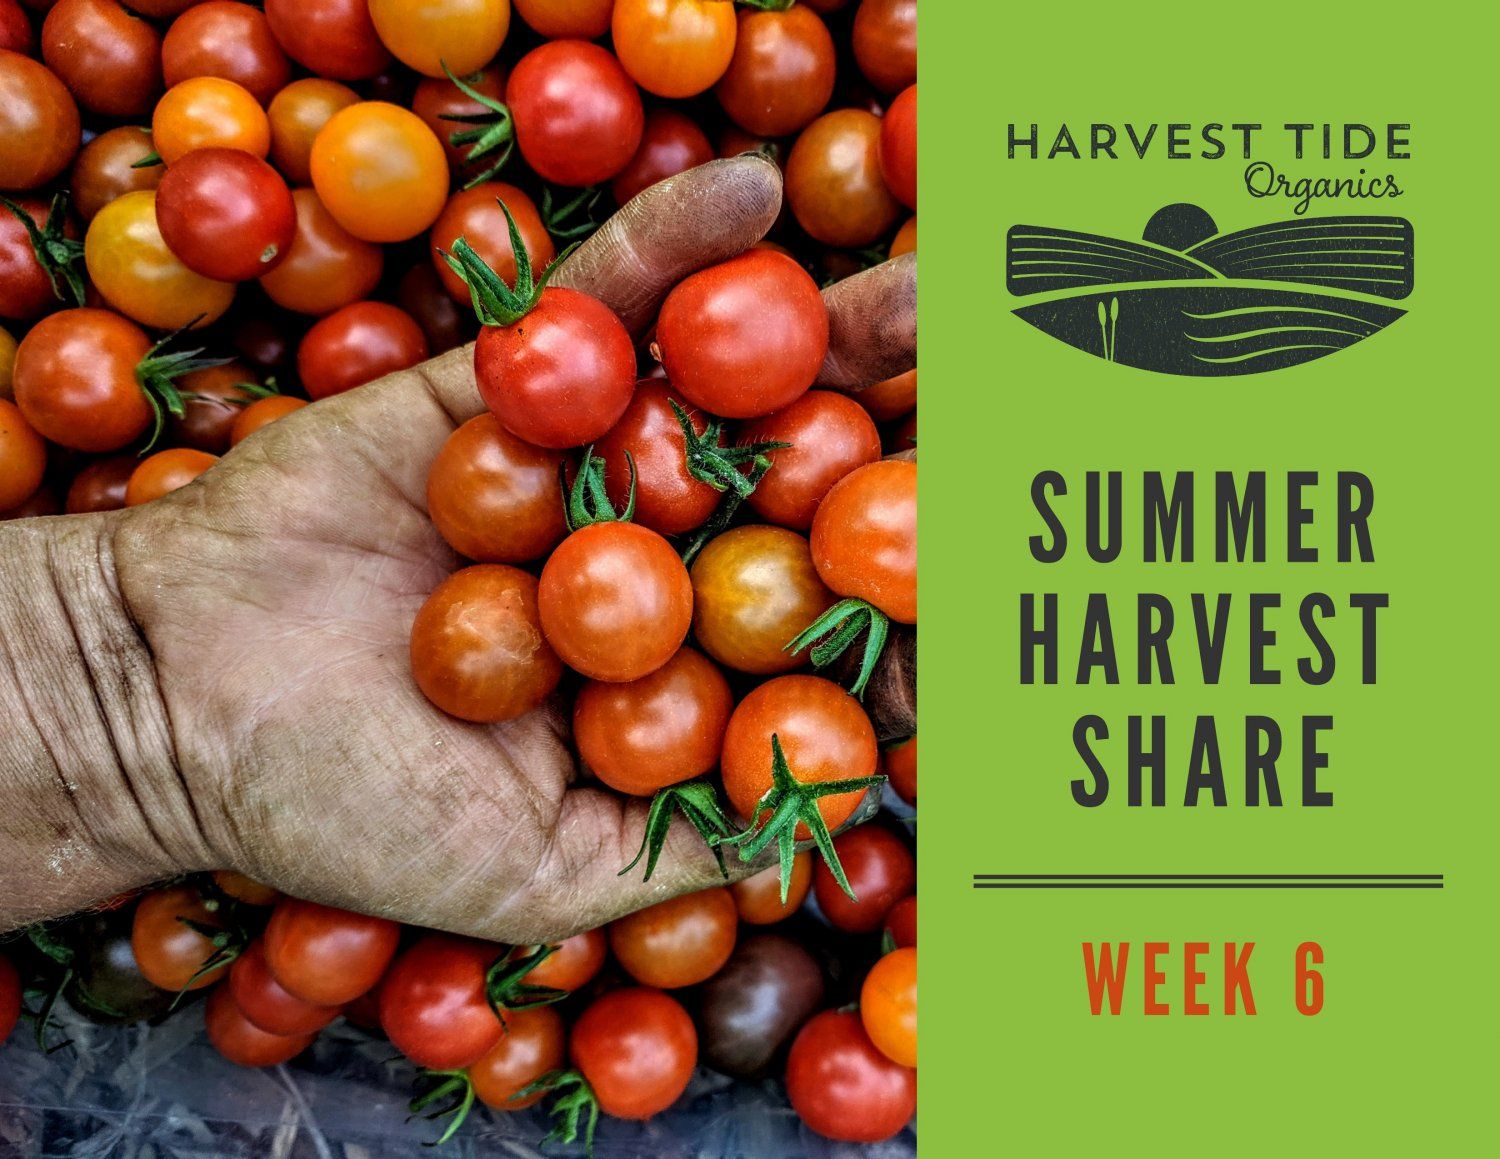 Next Happening: Summer Harvest Share - Week 6